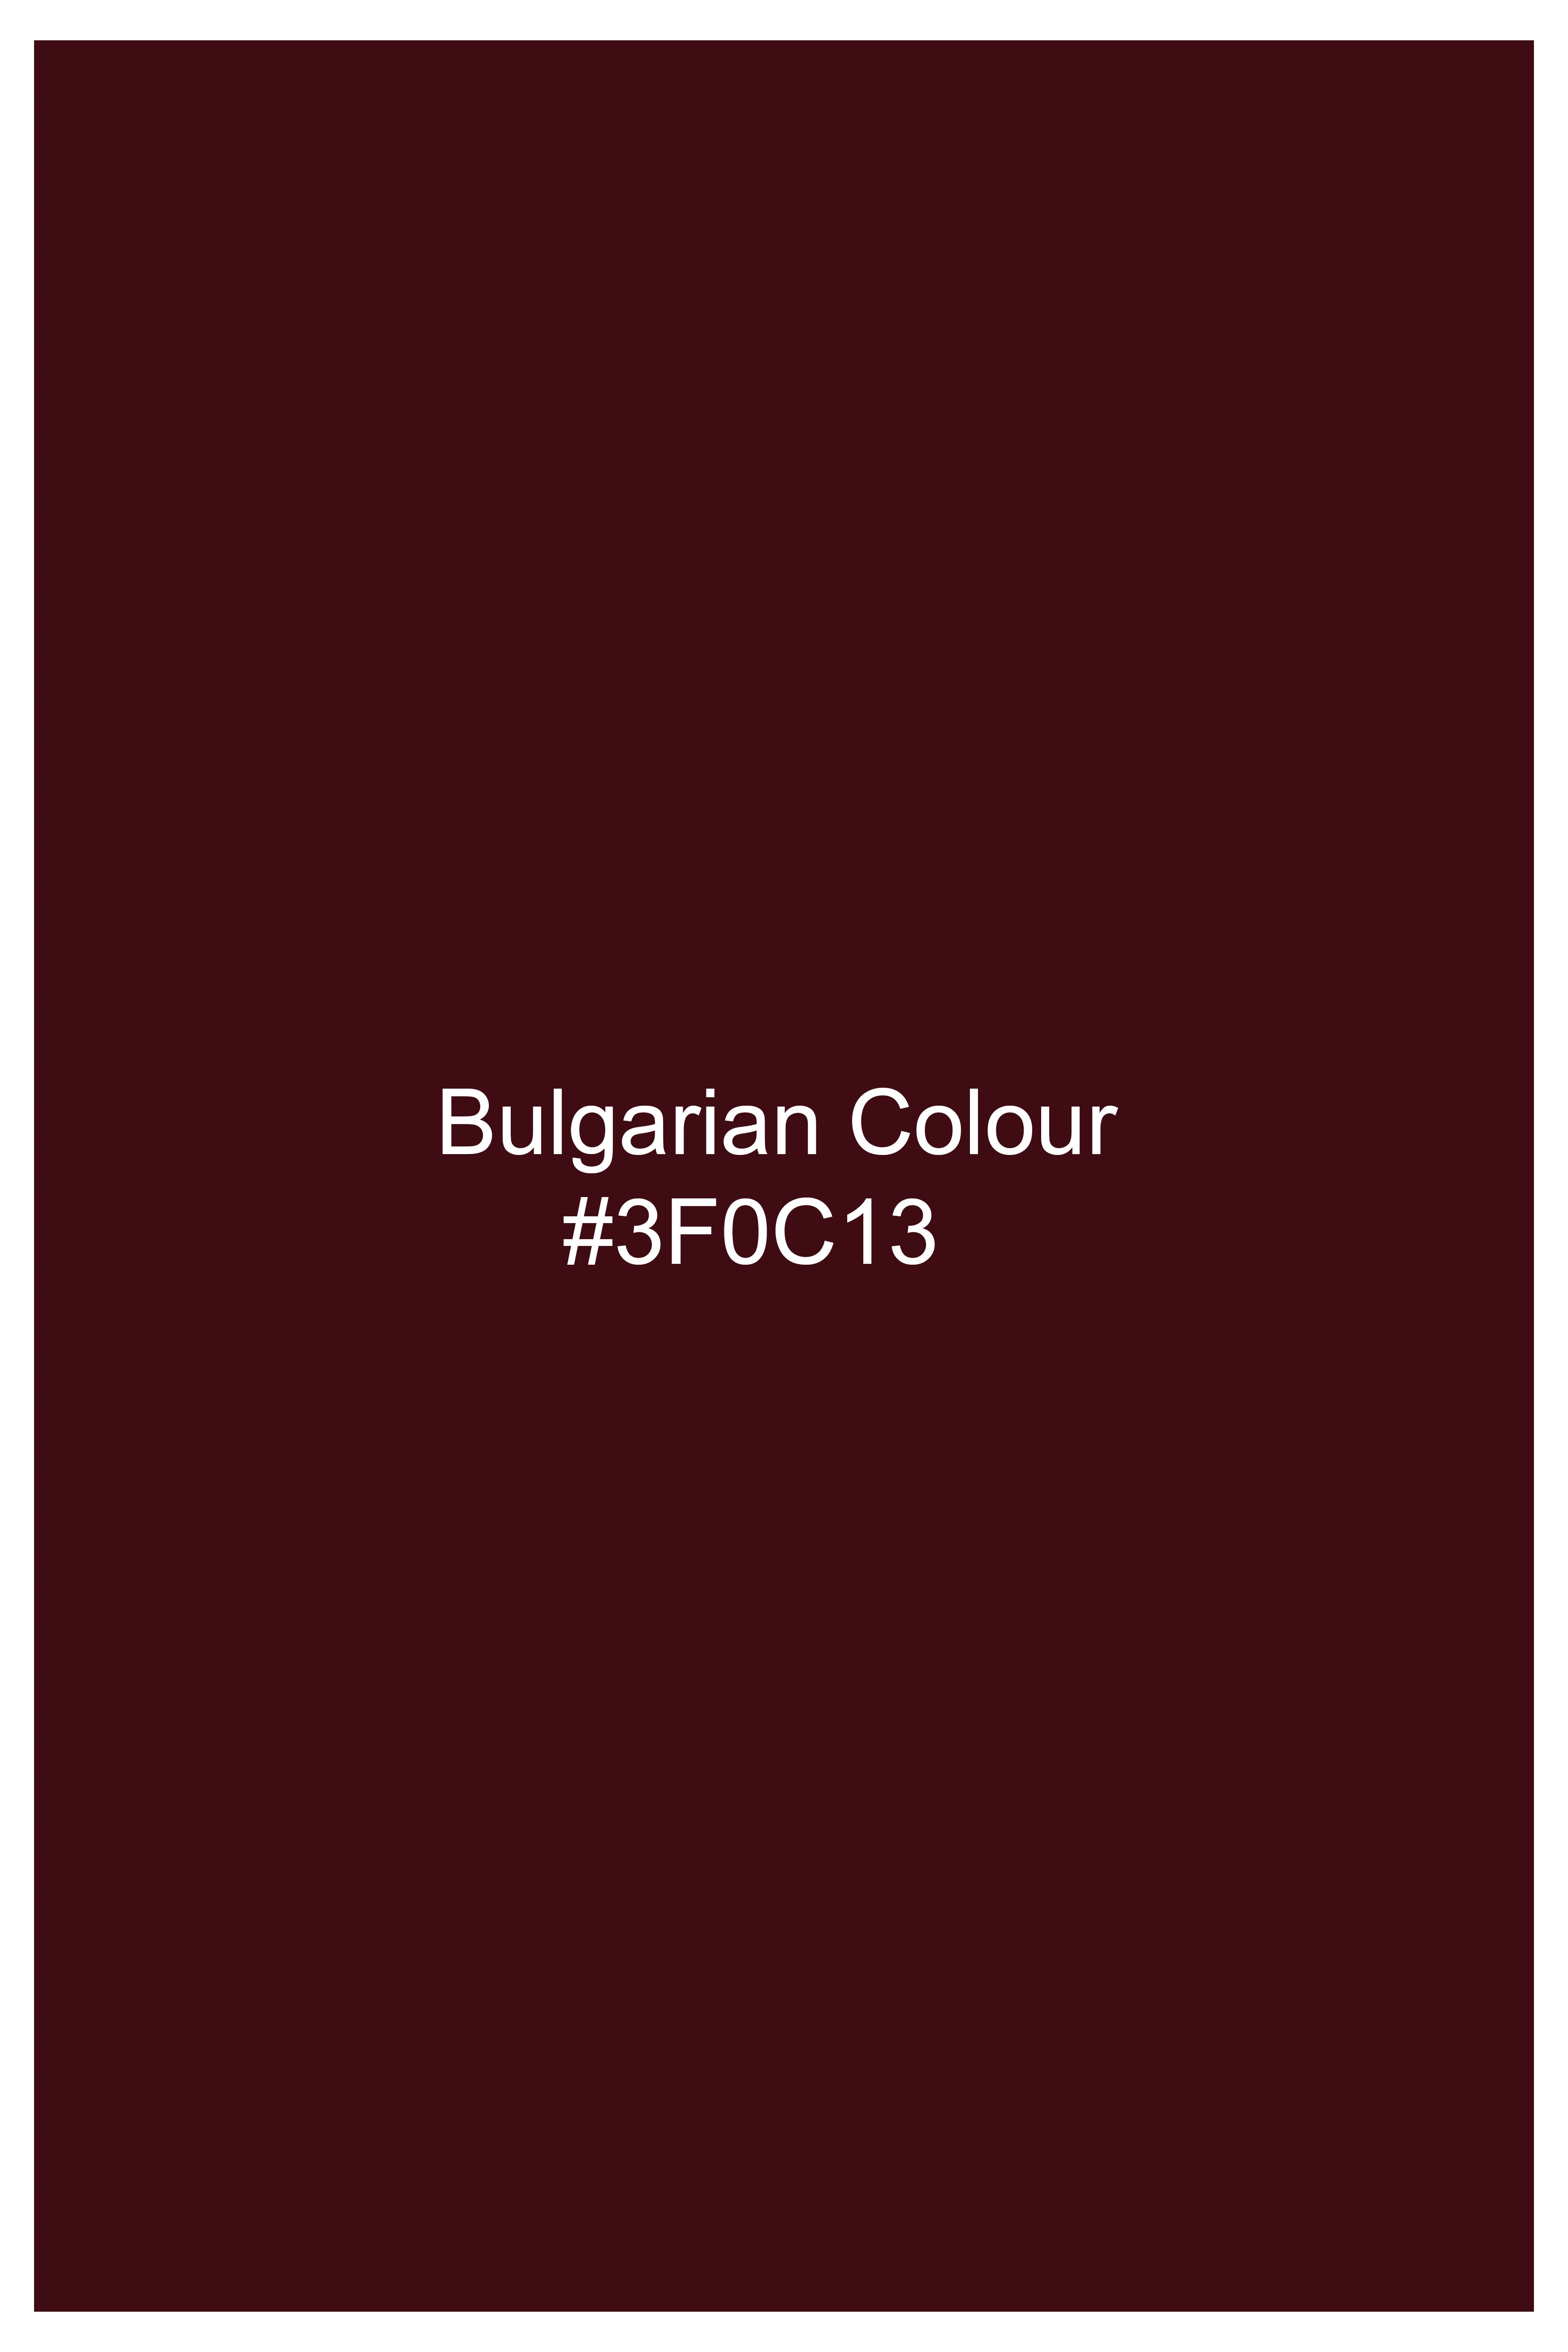 Bulgarian Maroon Double Breasted Crushed Velvet Blazer